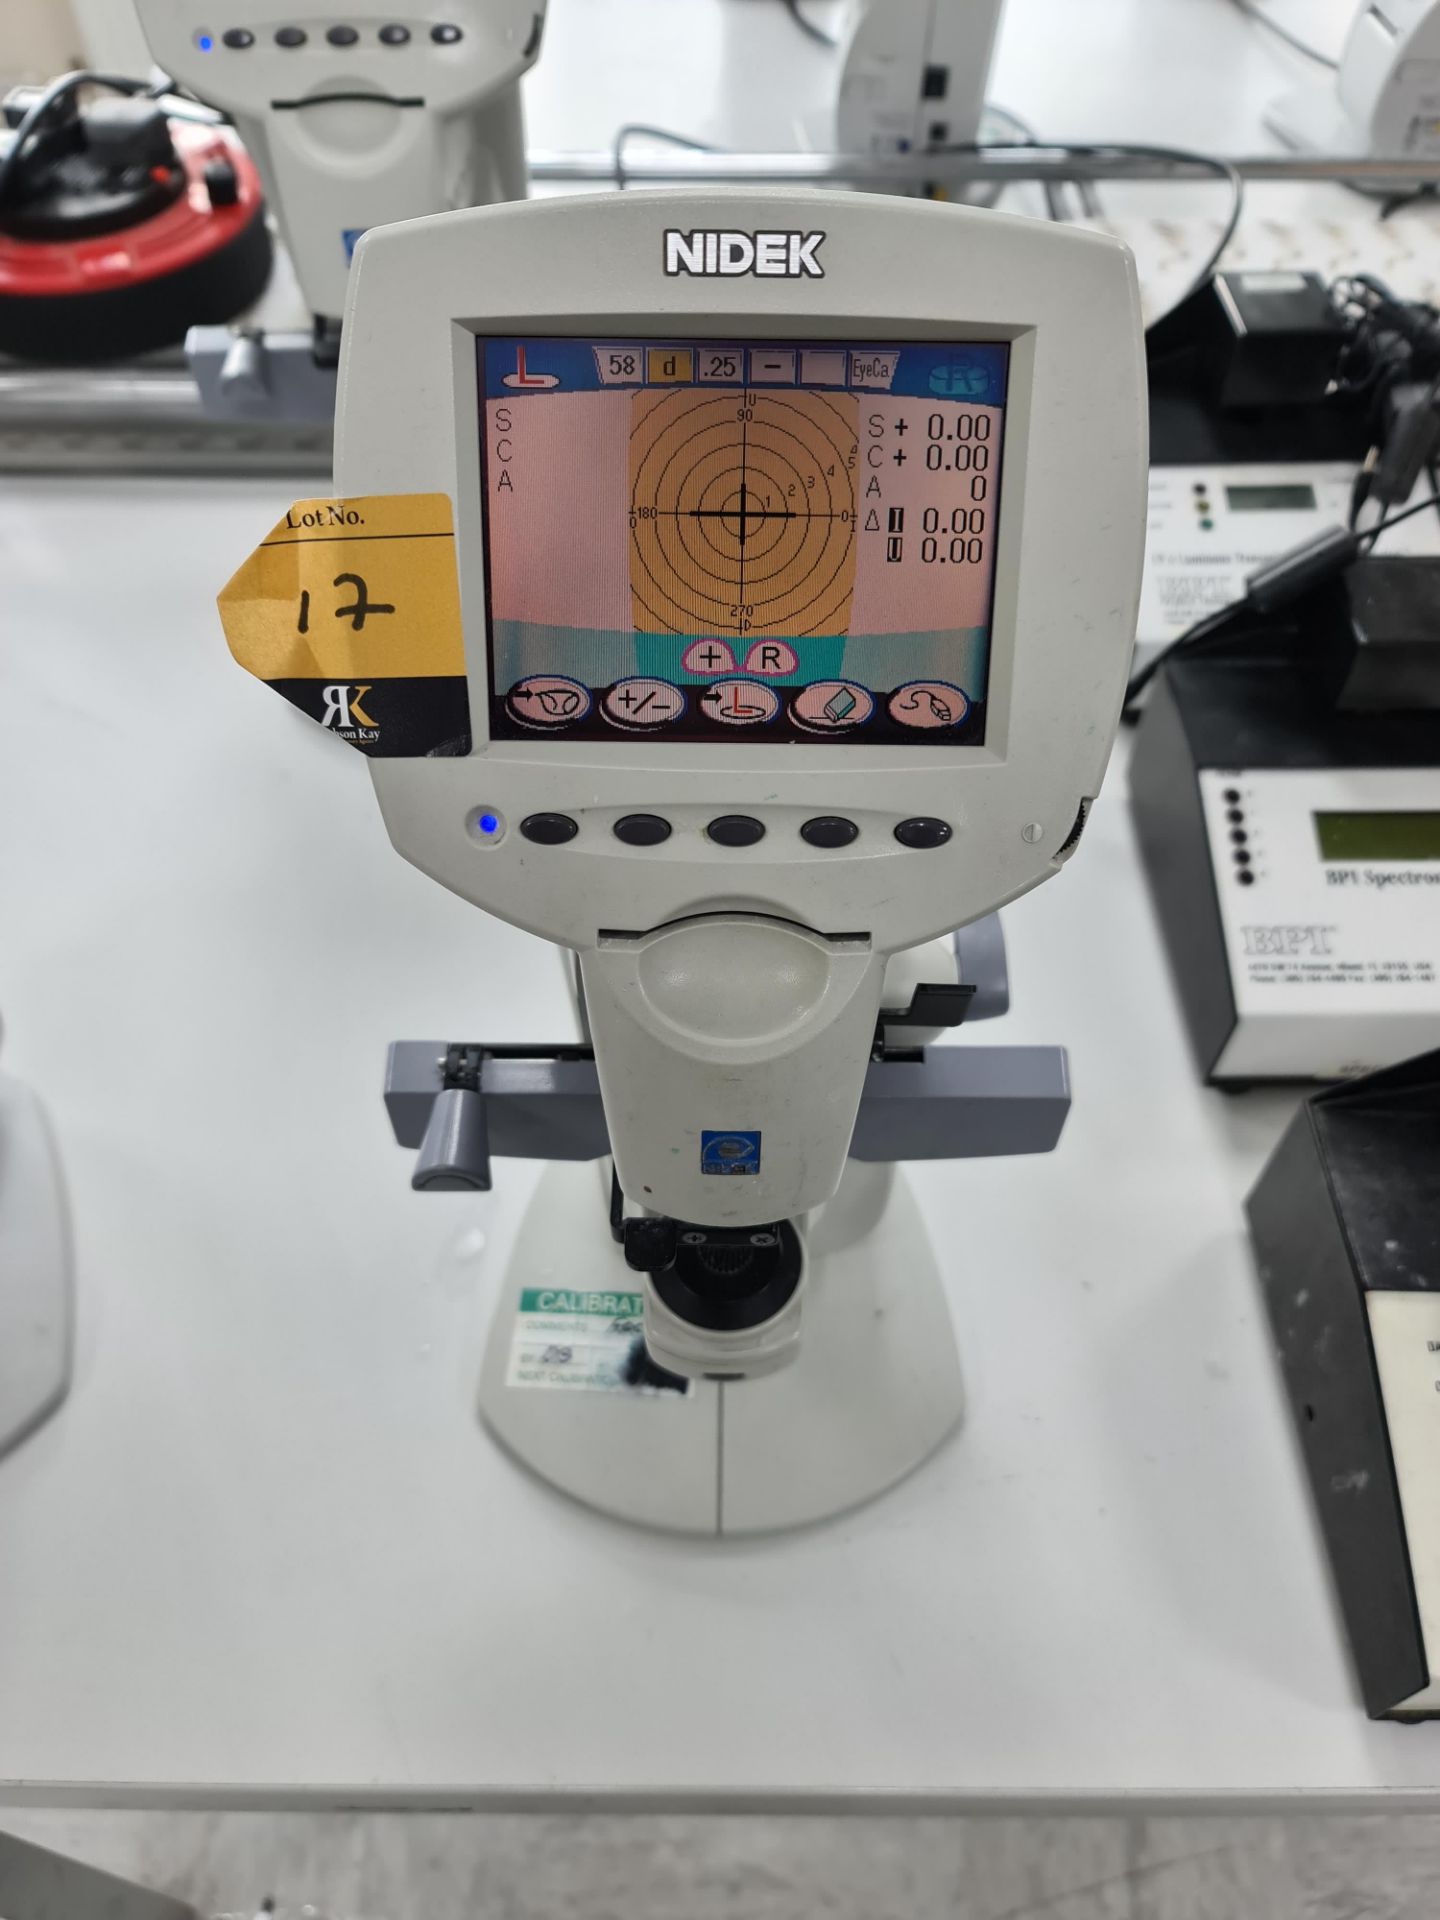 Nidek Auto Lensmeter model LM-600PD